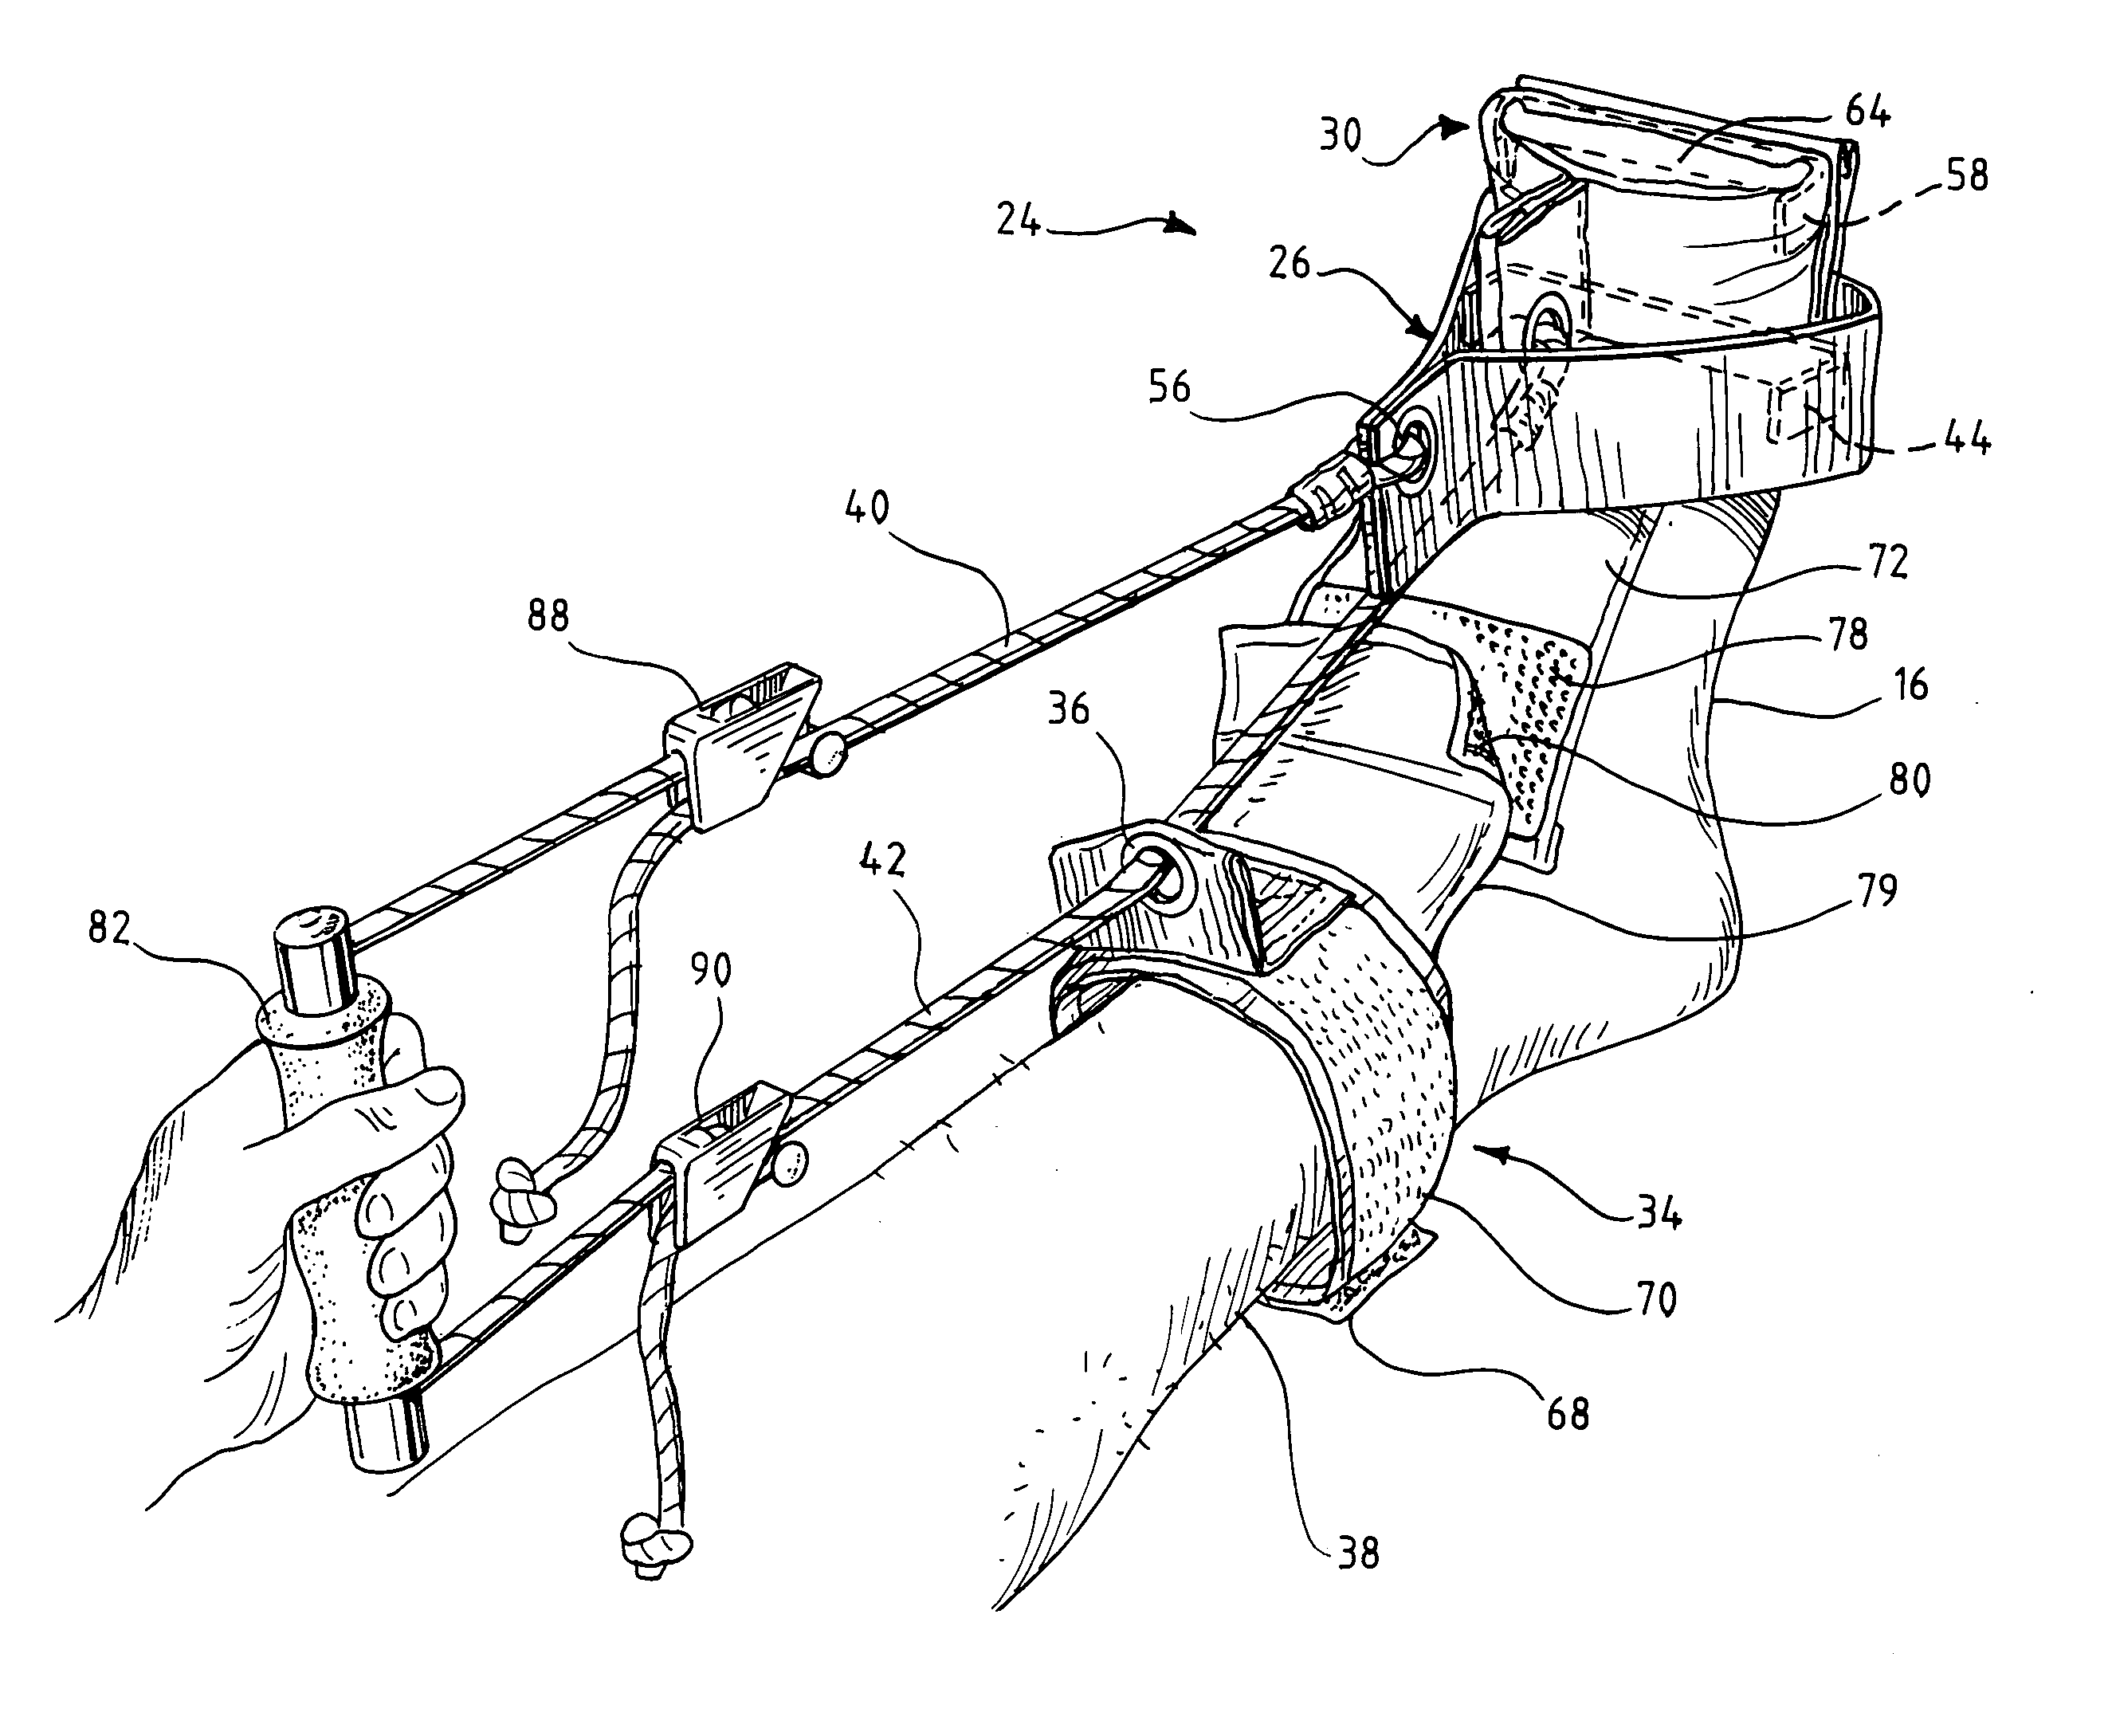 Non-weight bearing foot and leg exercising apparatus